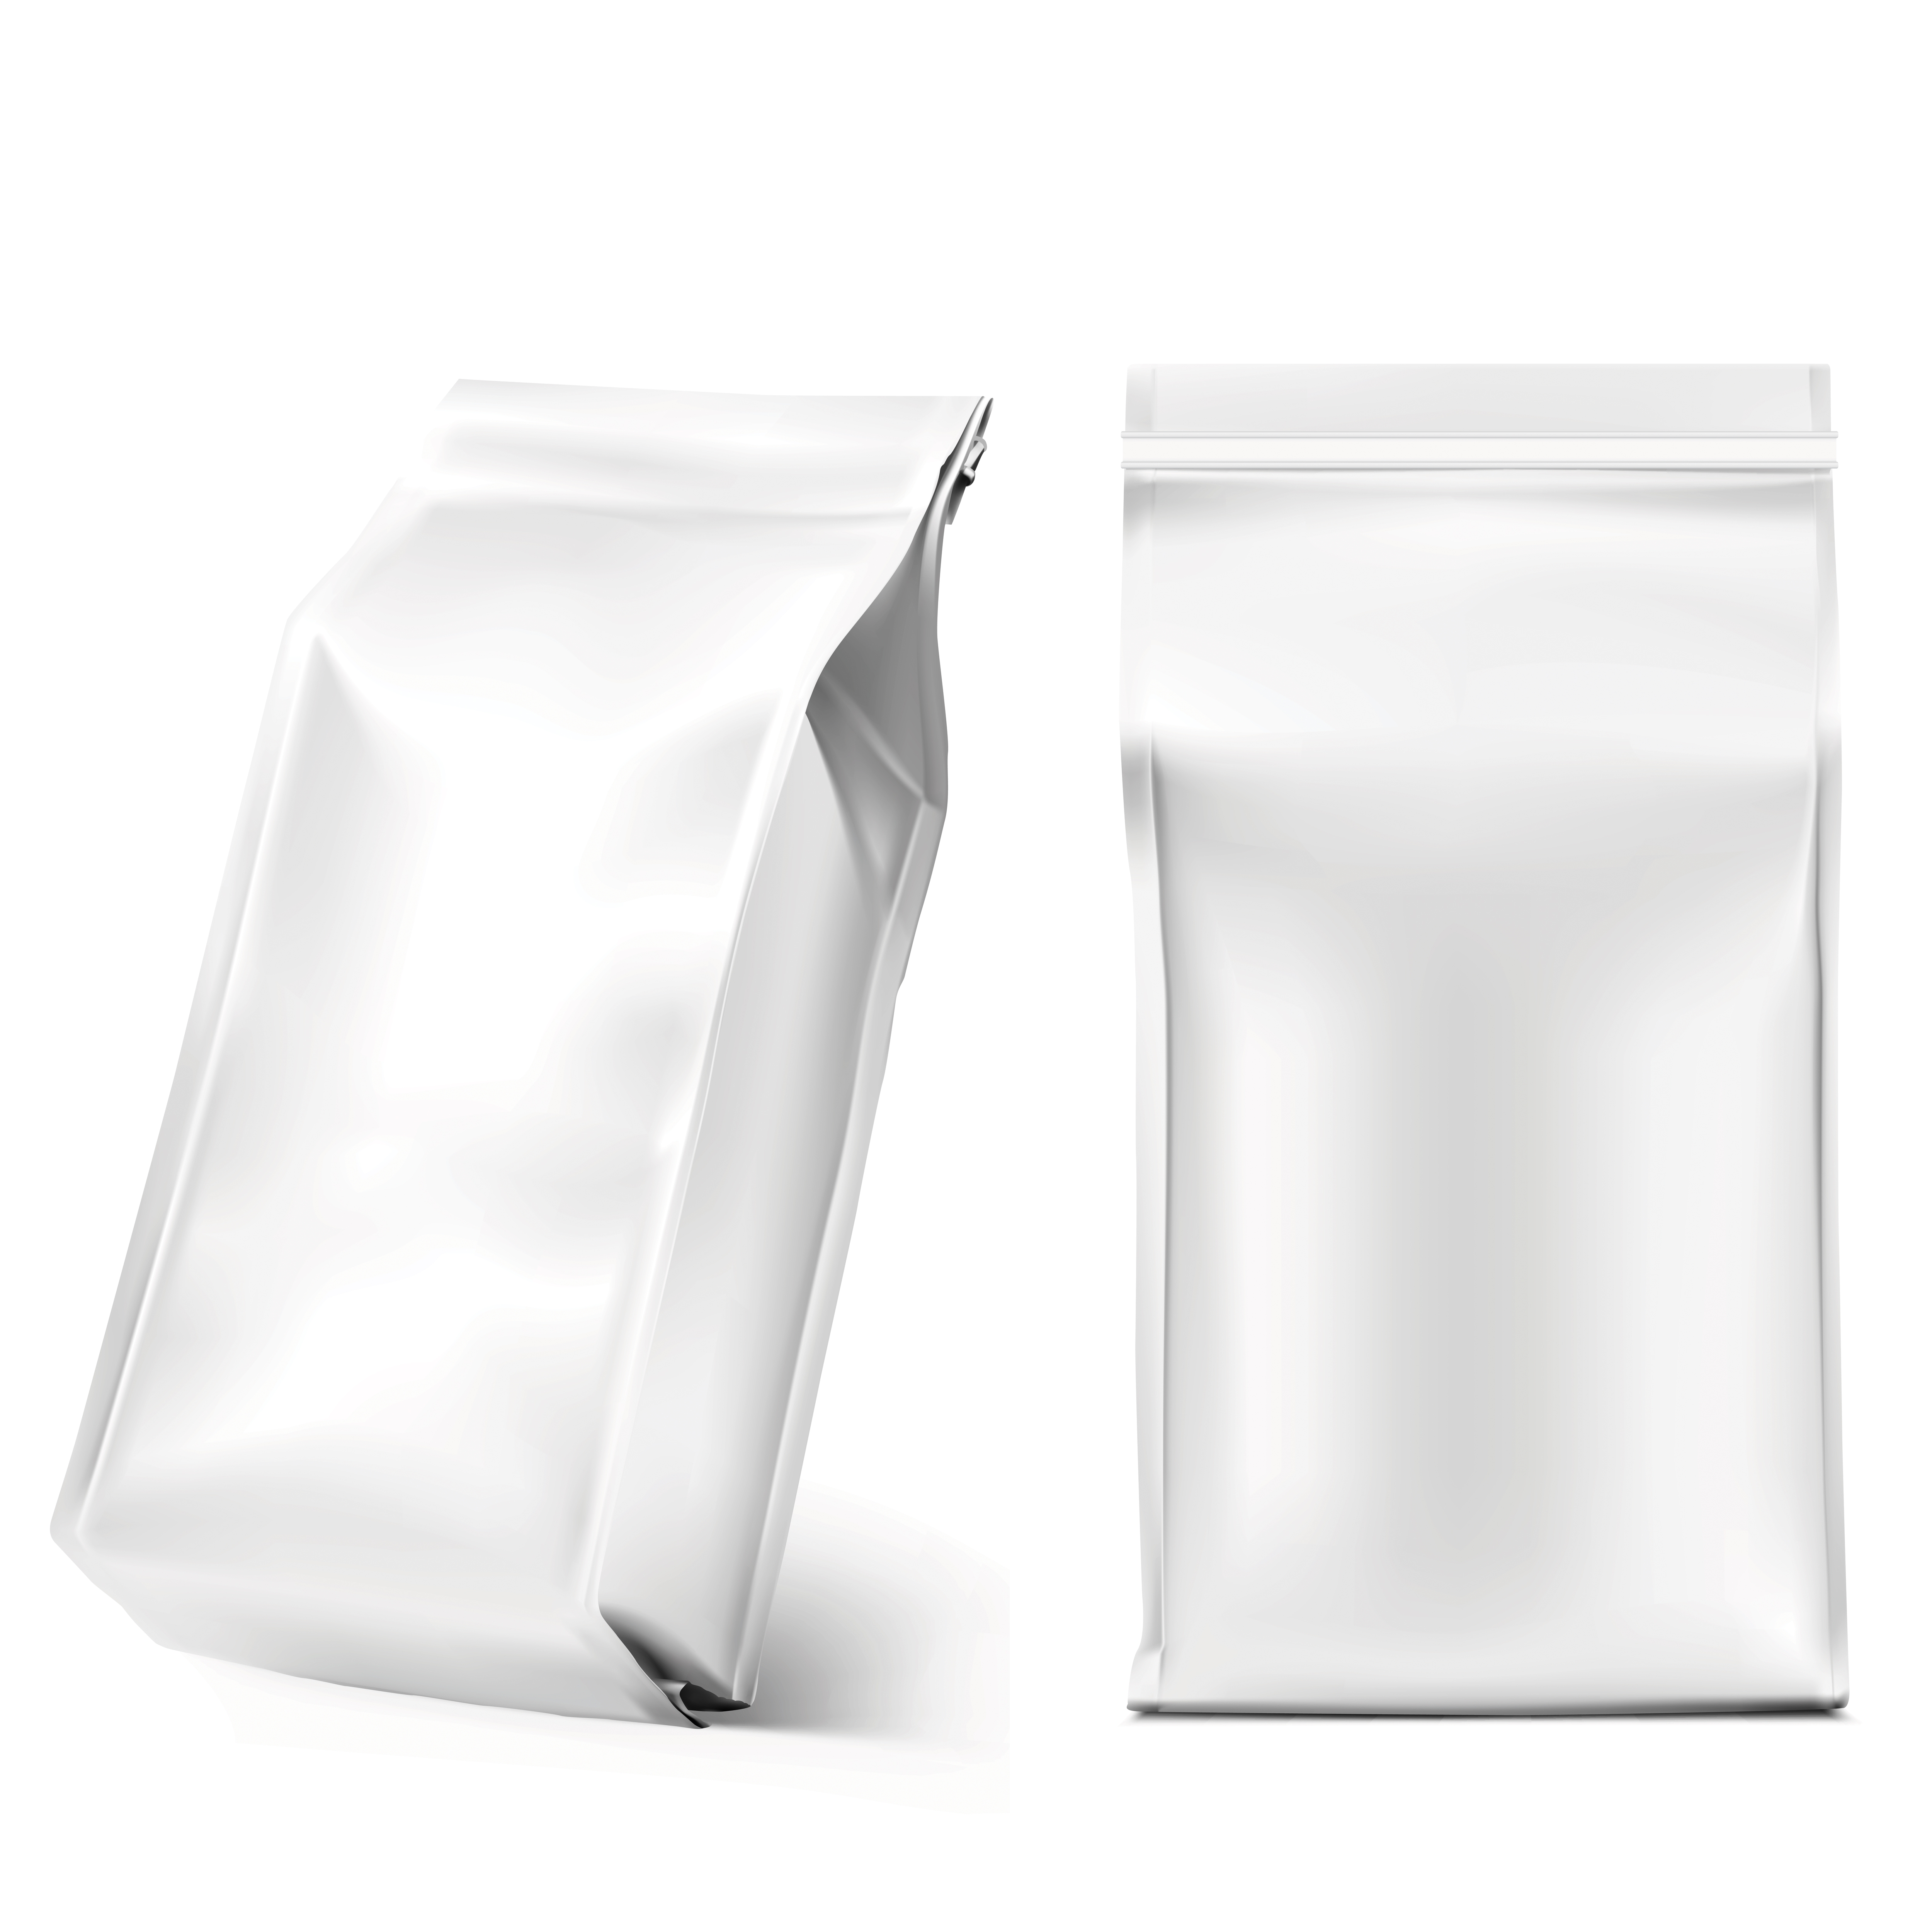 Quad Seal Pouch & Packaging Bags  Versatile Bag Design for Shelf